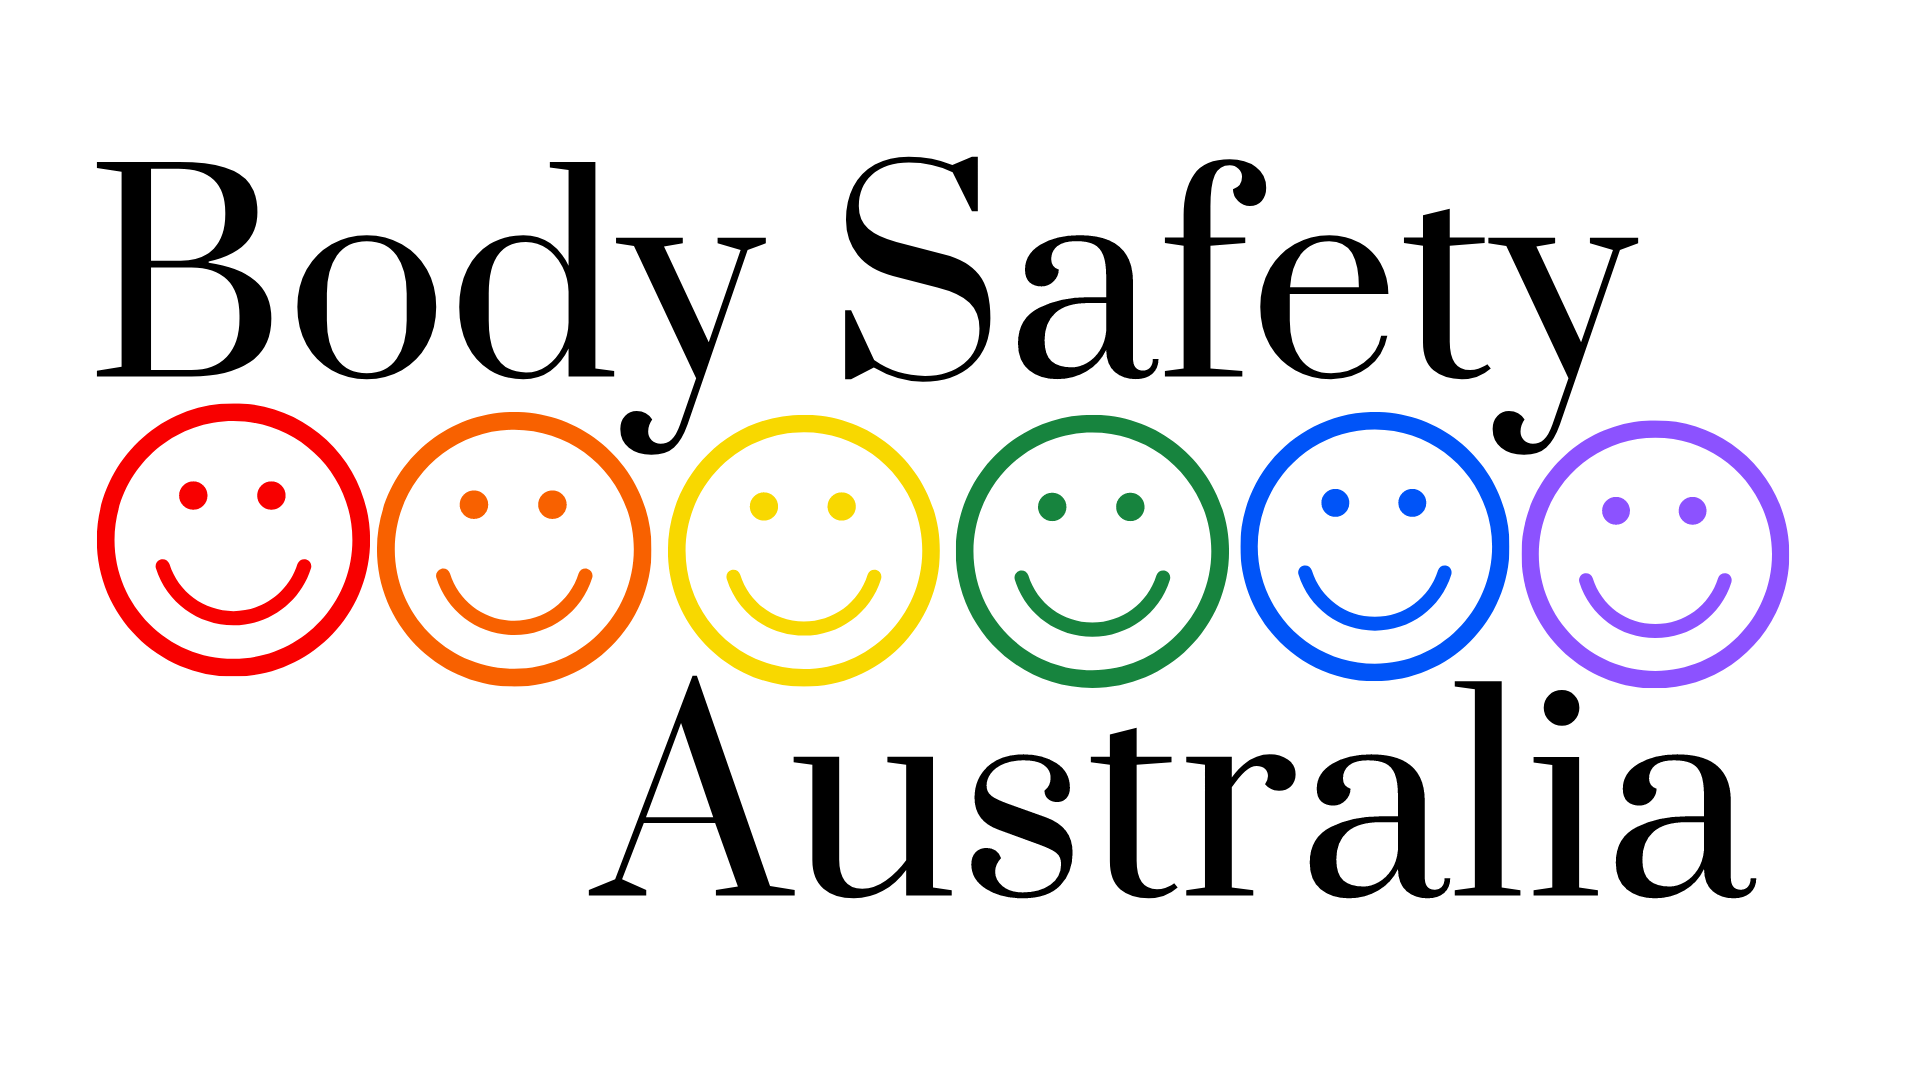 Profile of Body Safety Australia